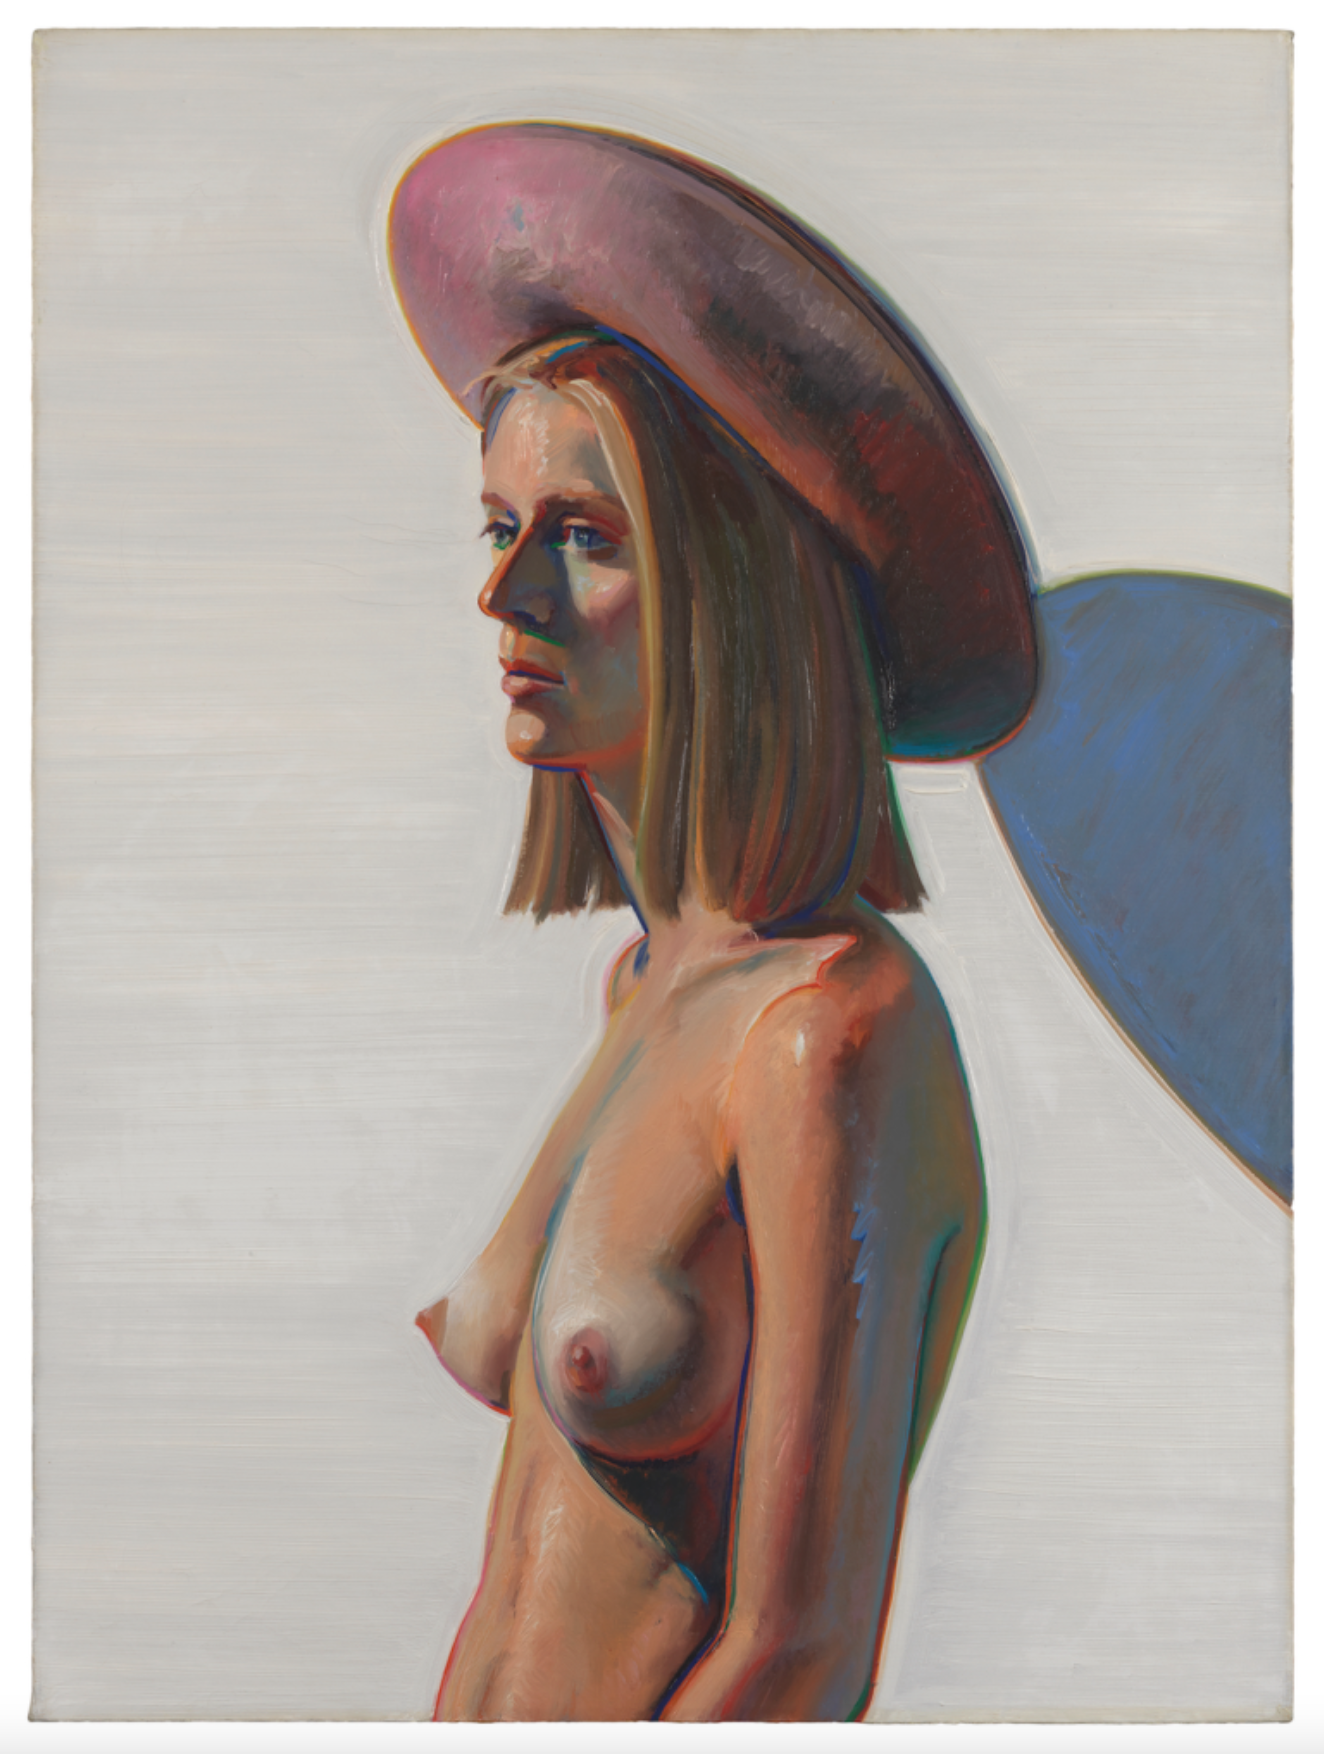 Wayne Thiebaud, Girl with Pink Hat, 1973.